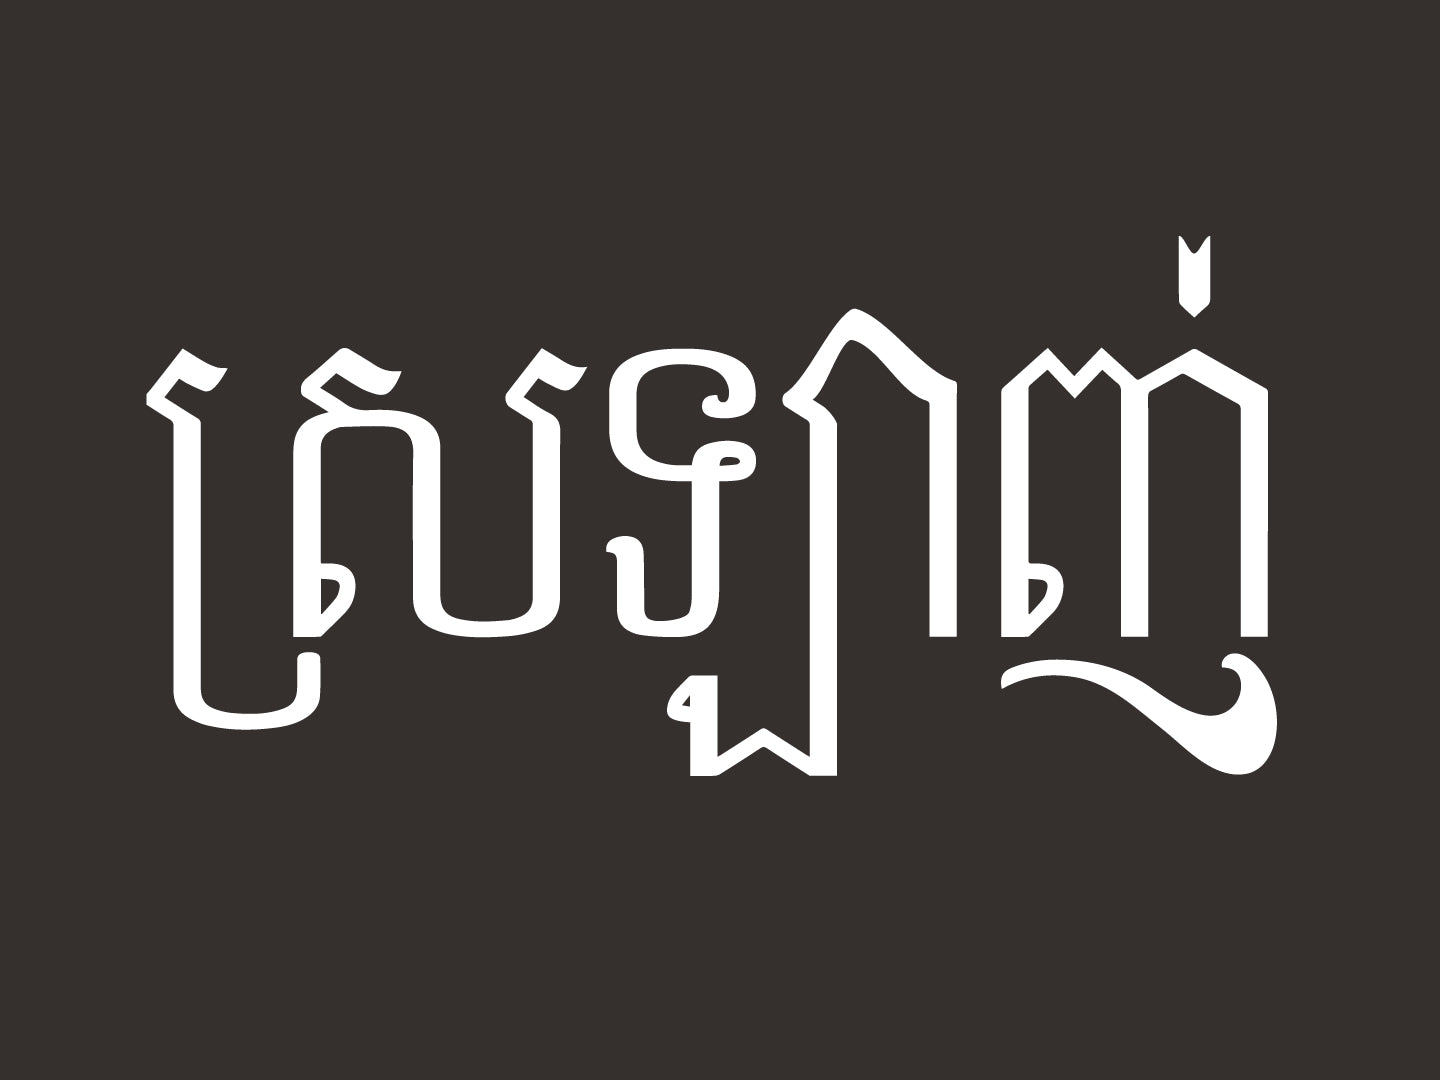 Khmer (Cambodian)